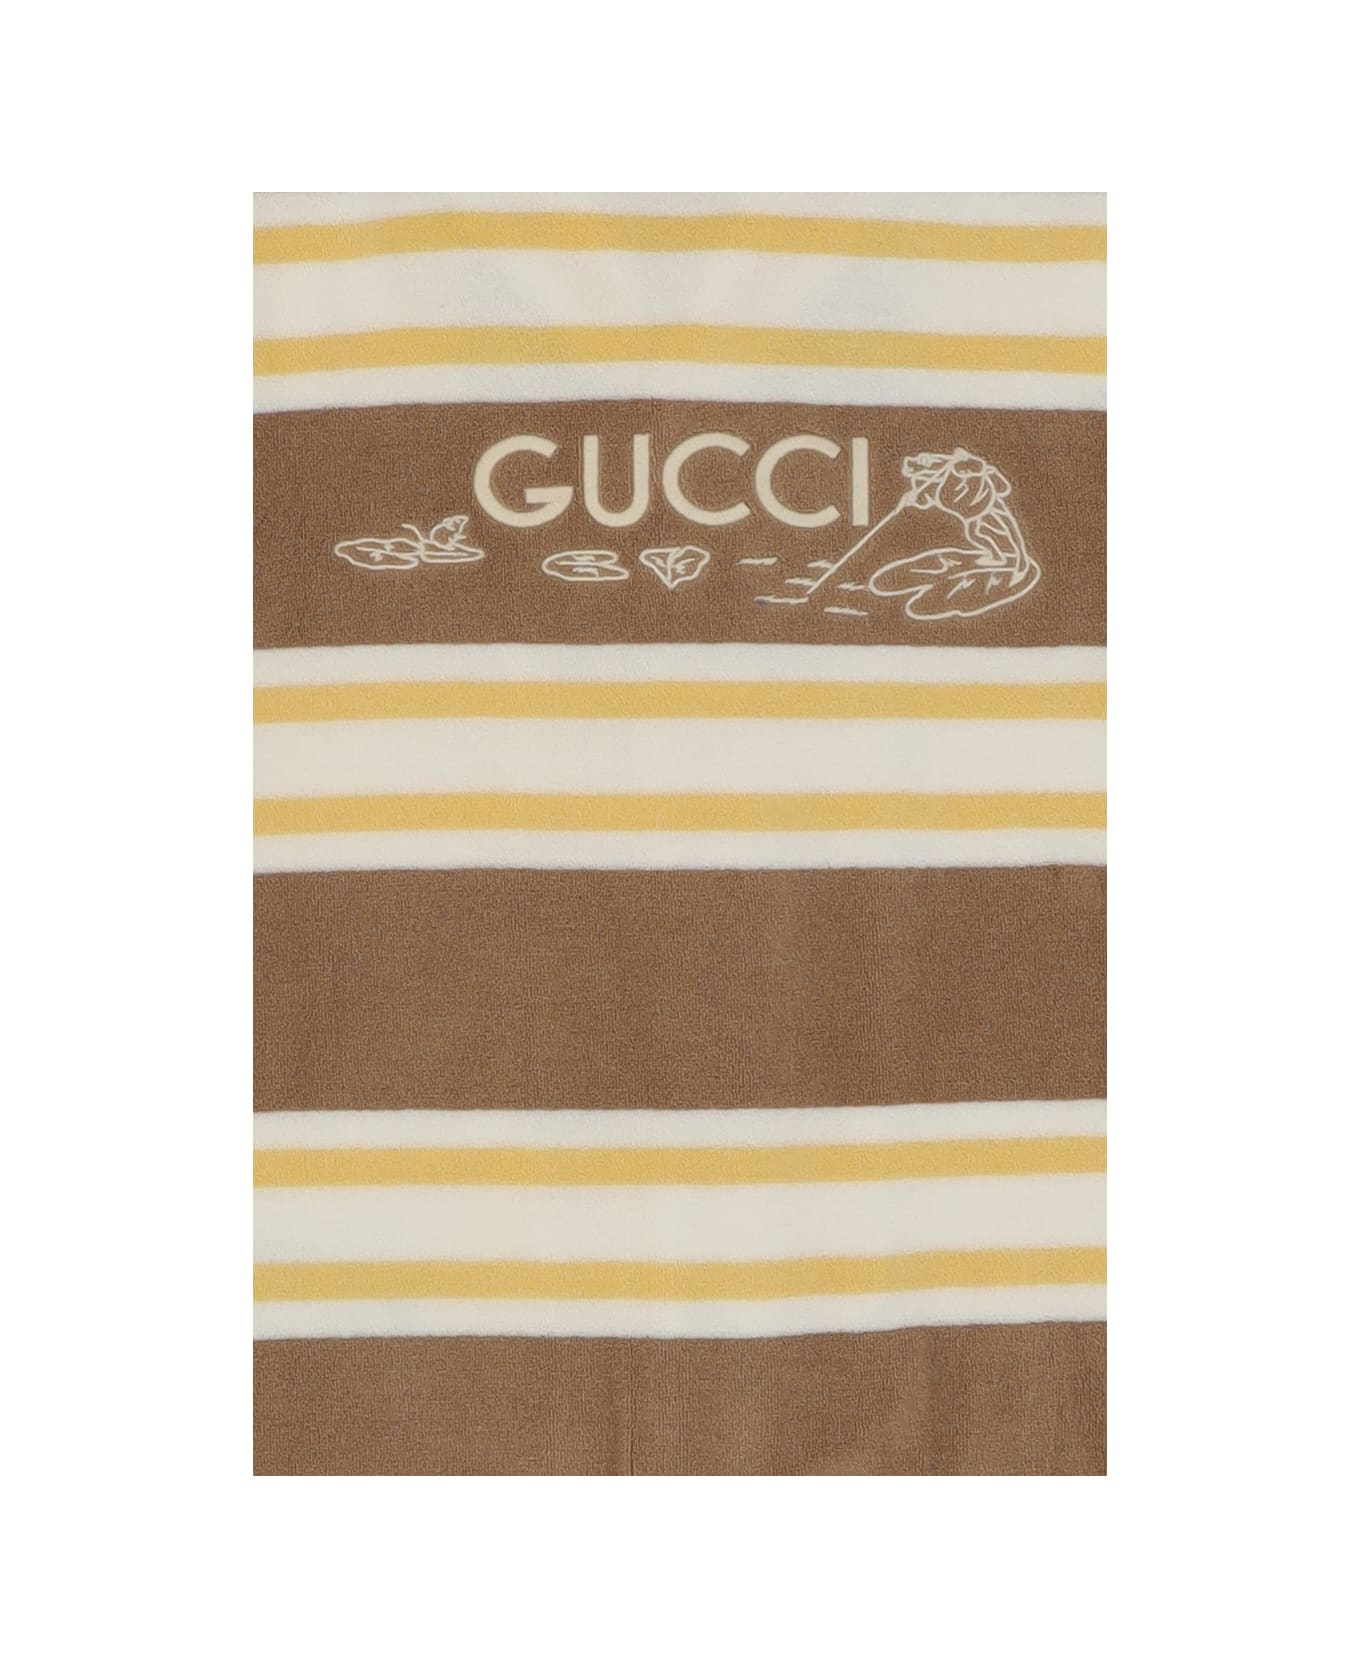 Gucci Shirt For Boy - Yellow/brown